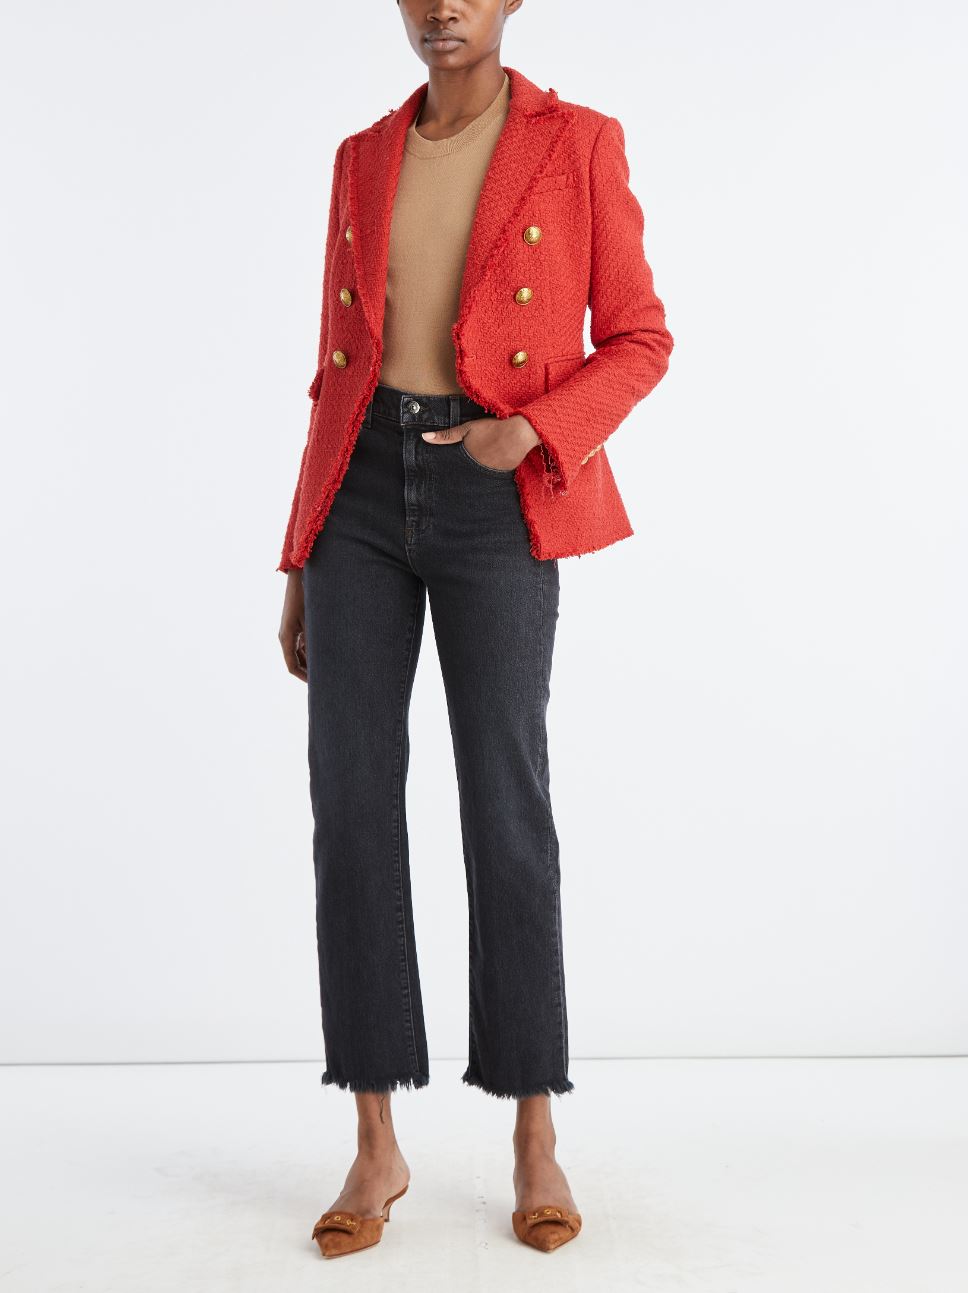 Miller dickey jacket - nantucket red Blazers & Jackets